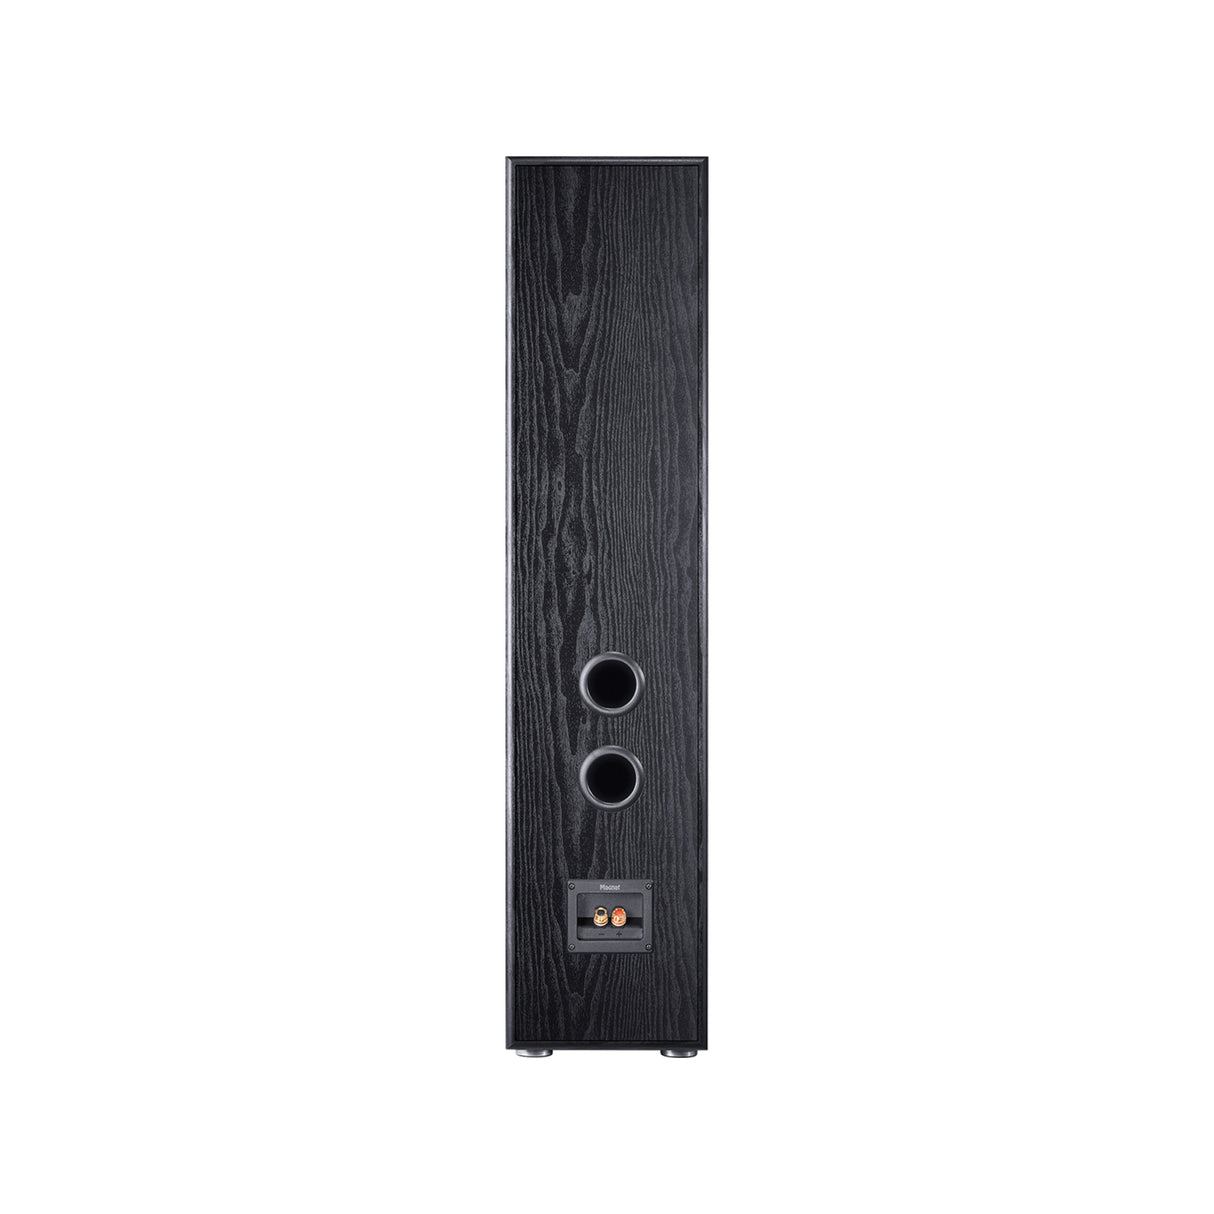 Magnat Monitor S70 - 3-Way Floor Standing Speaker With Dolby Atmos Height Speaker (Pair)